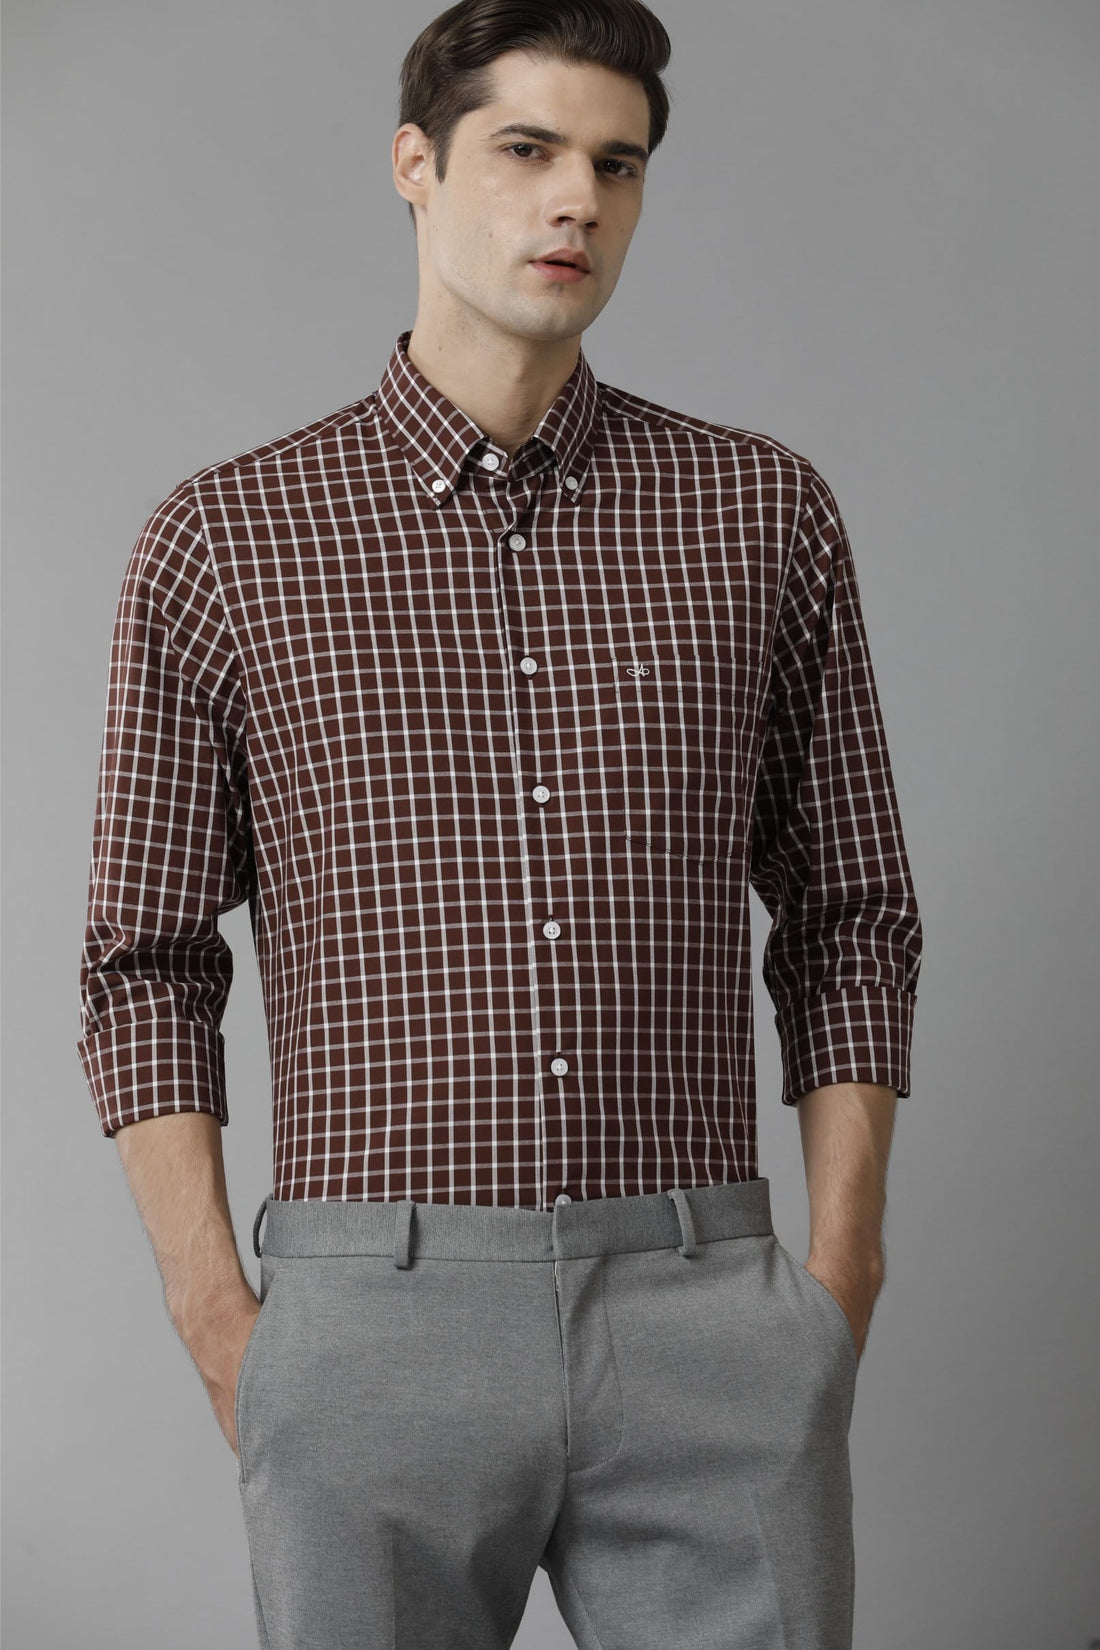 Checkered Cotton Casual Brown Shirt